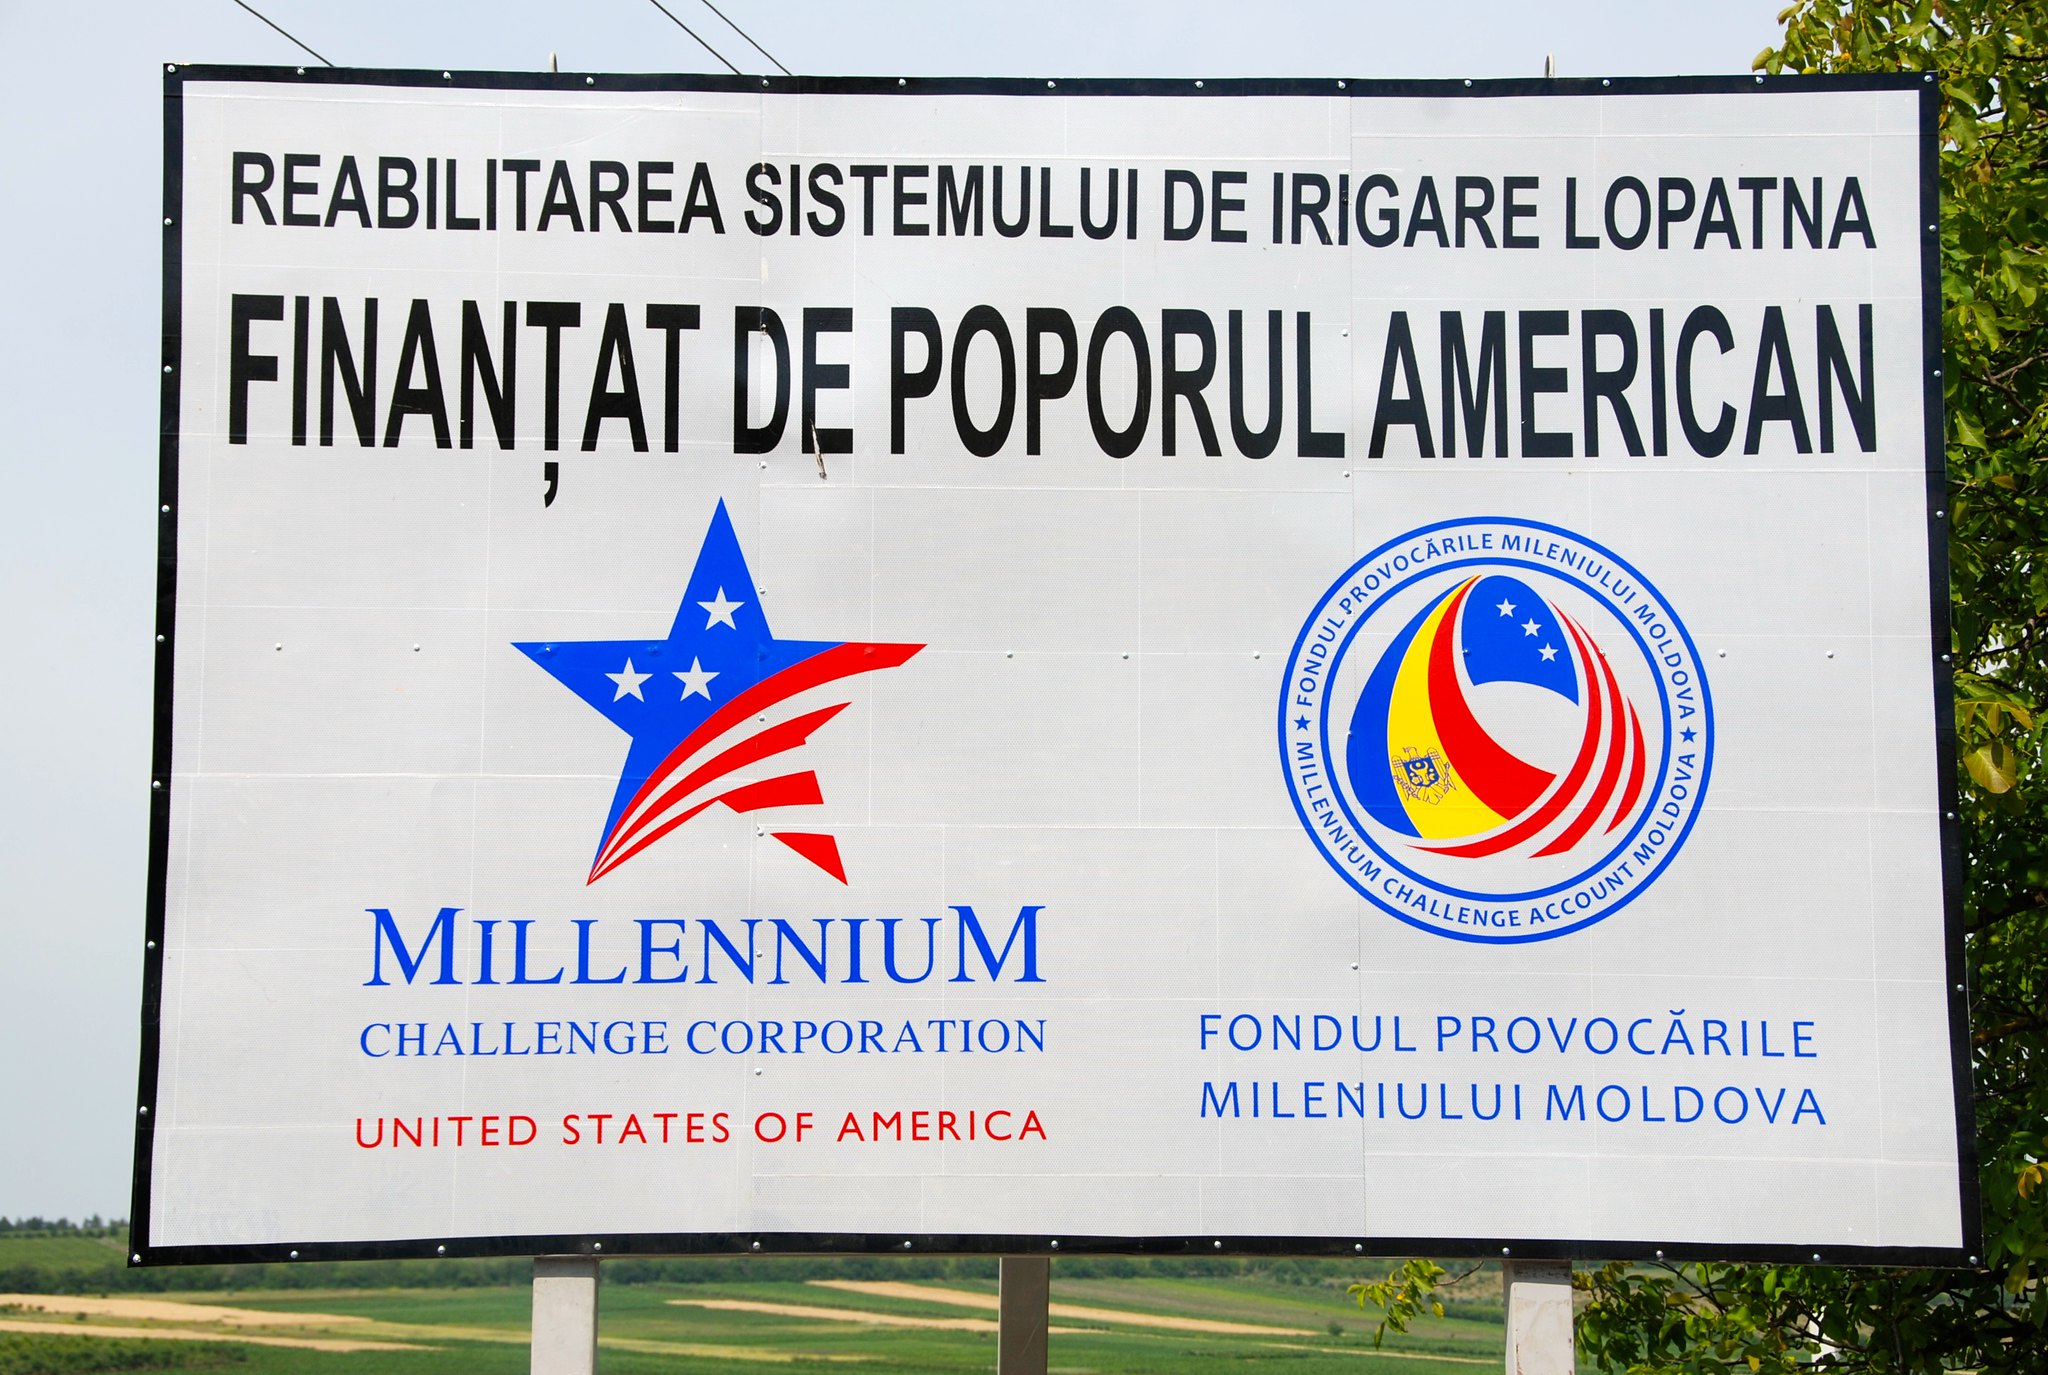 Millennium Challenge Corporation Project Sign in Moldova